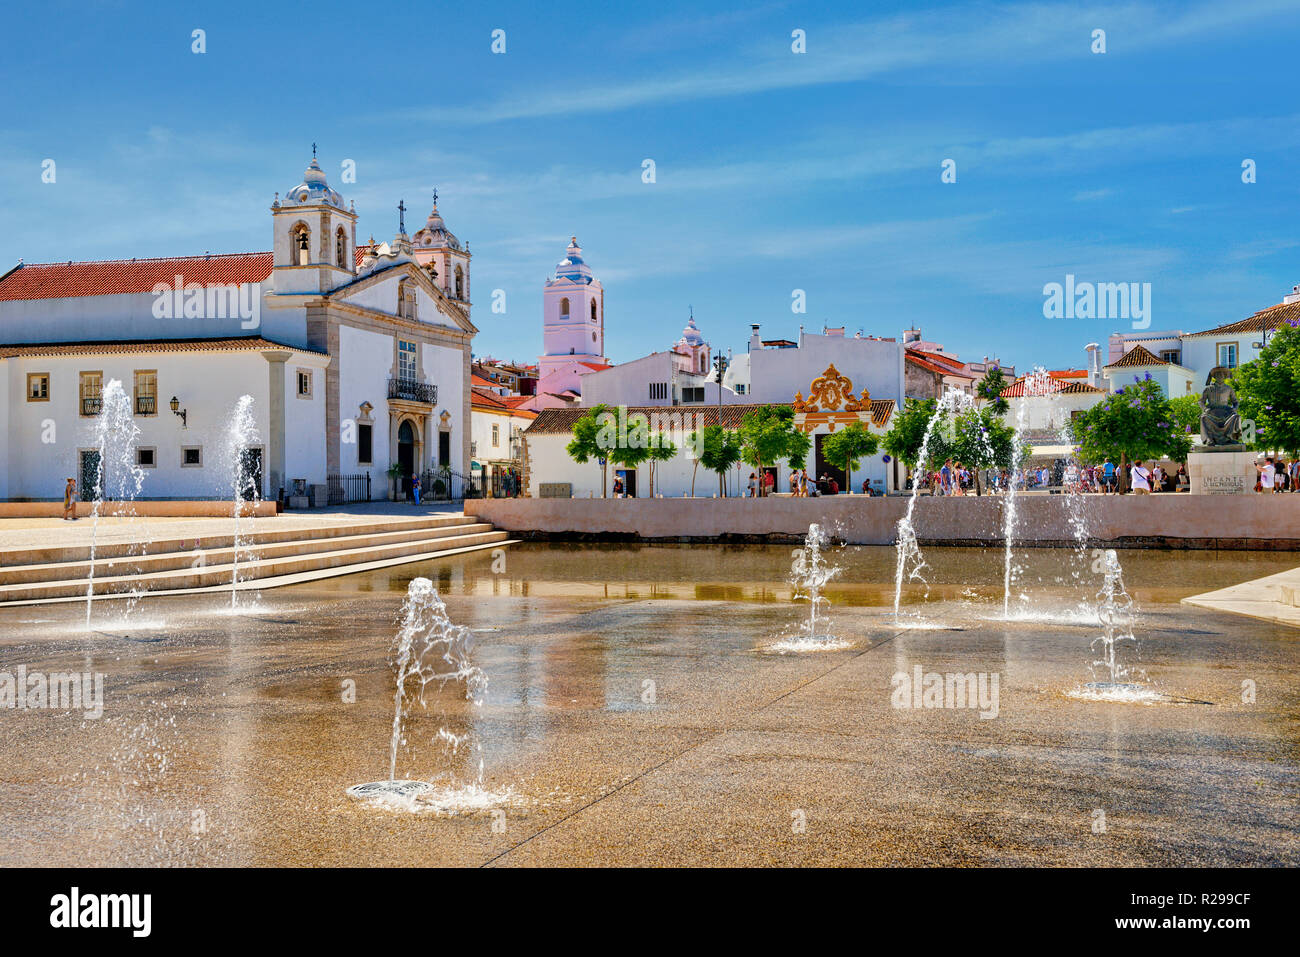 Portugal; Algarve; Lagos; the water feature fountains in the Praca do Infante Dom Henrique square and the igreja de Santa Maria de Lagos church Stock Photo